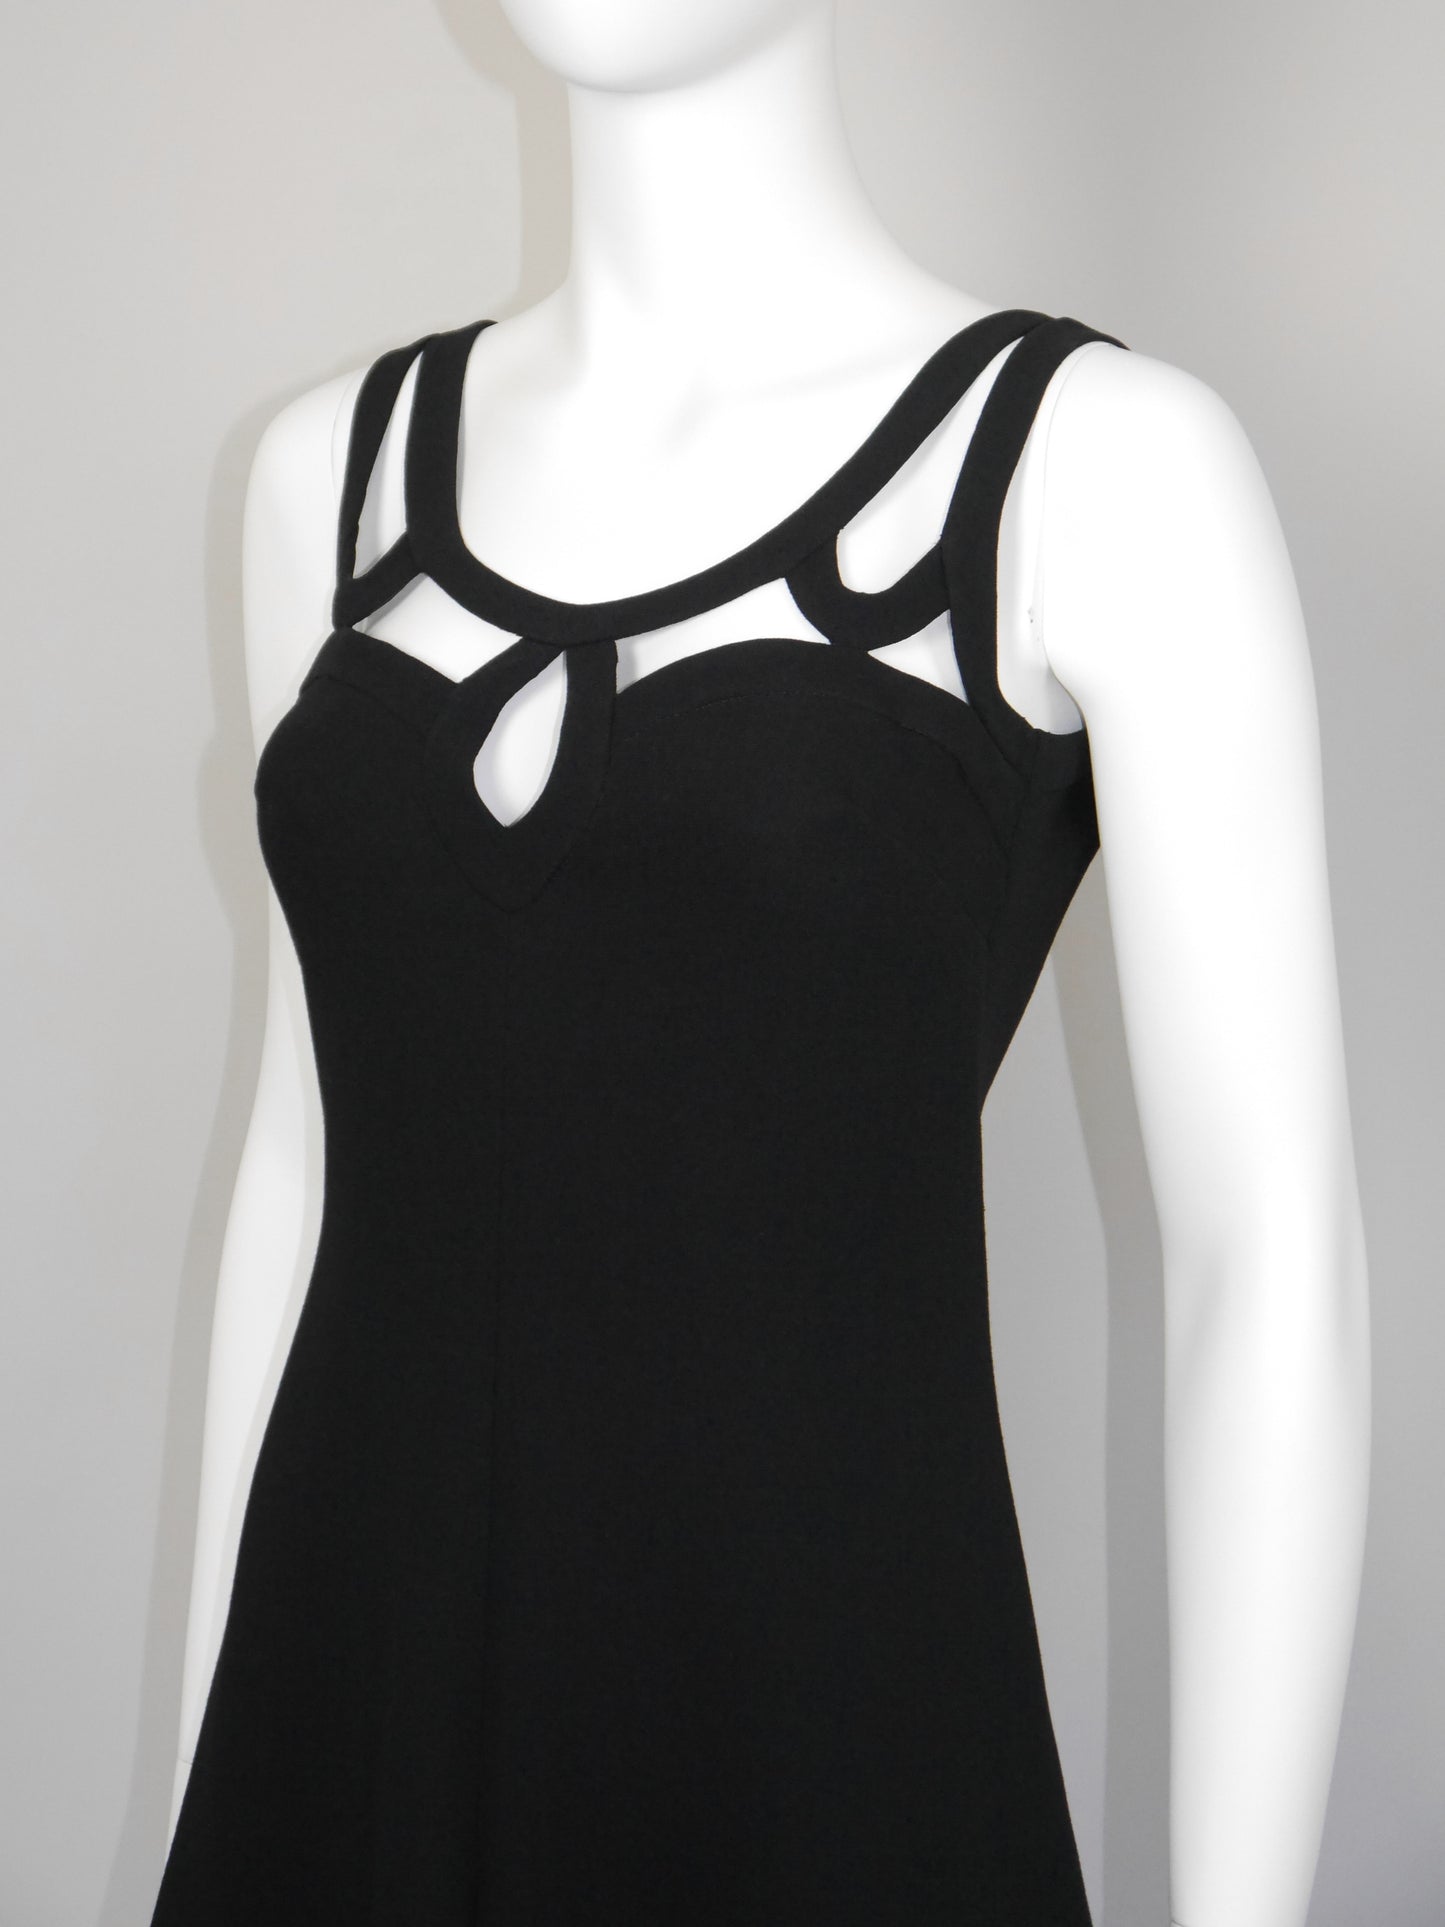 LOUIS FÉRAUD 1960s 1970s Vintage Black Maxi Dress w/ Openwork Neckline Size XXS-XS